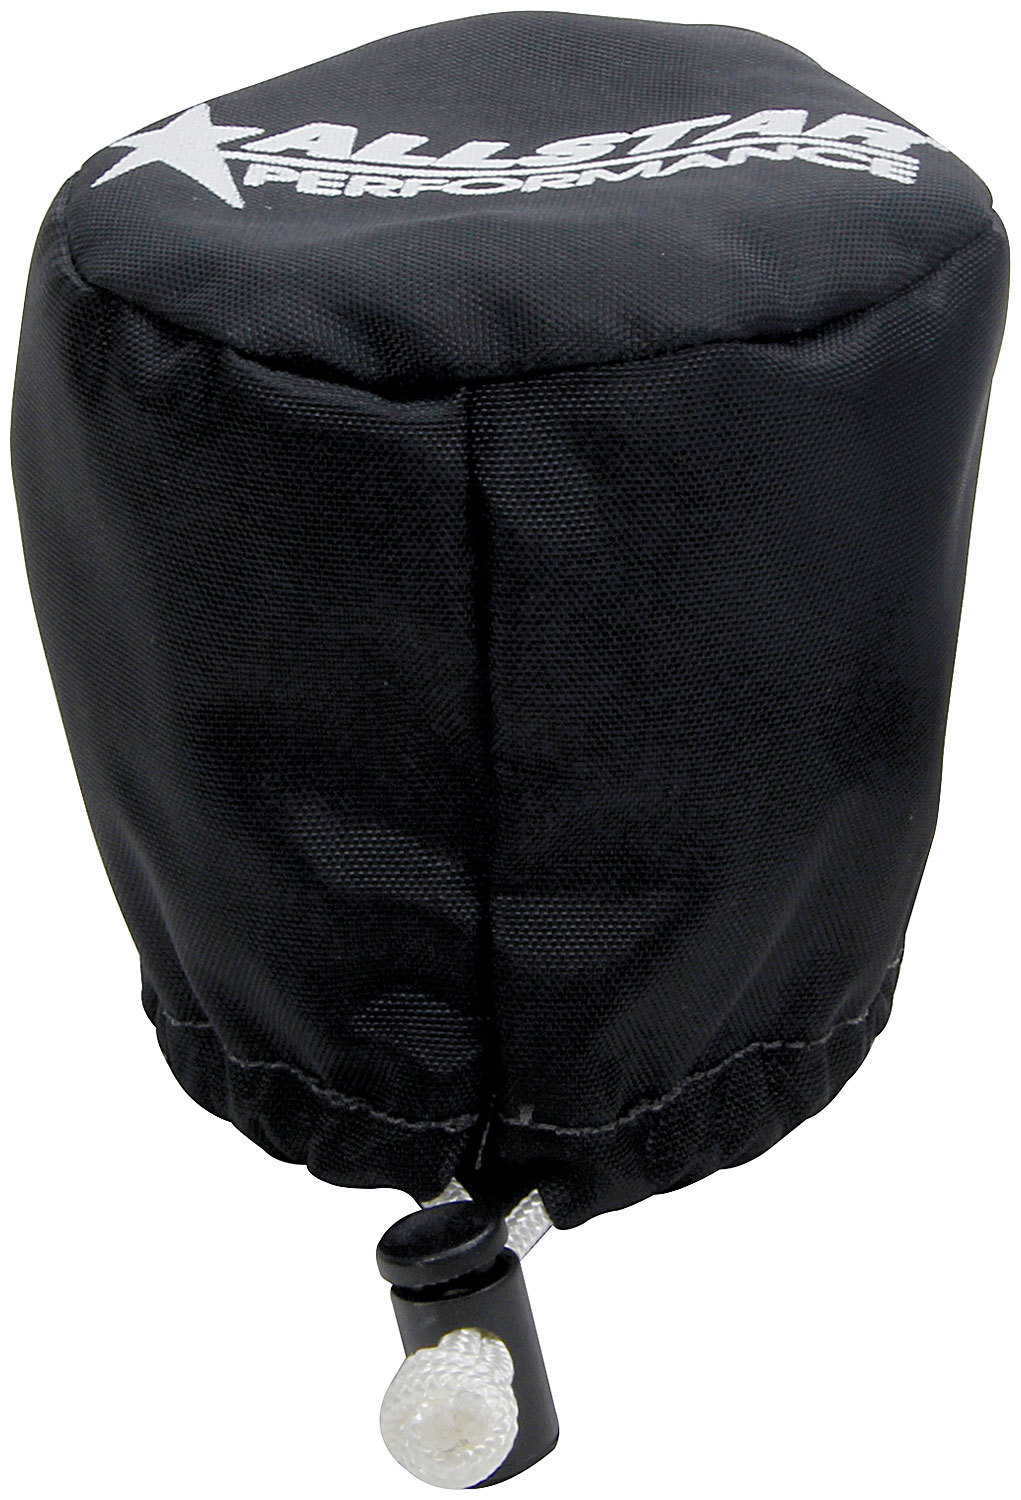 Scrub Bag - Water Repellent Cover - 3 in OD - Draw Strings - Allstar Logo - Cotton - Black - Universal - Each